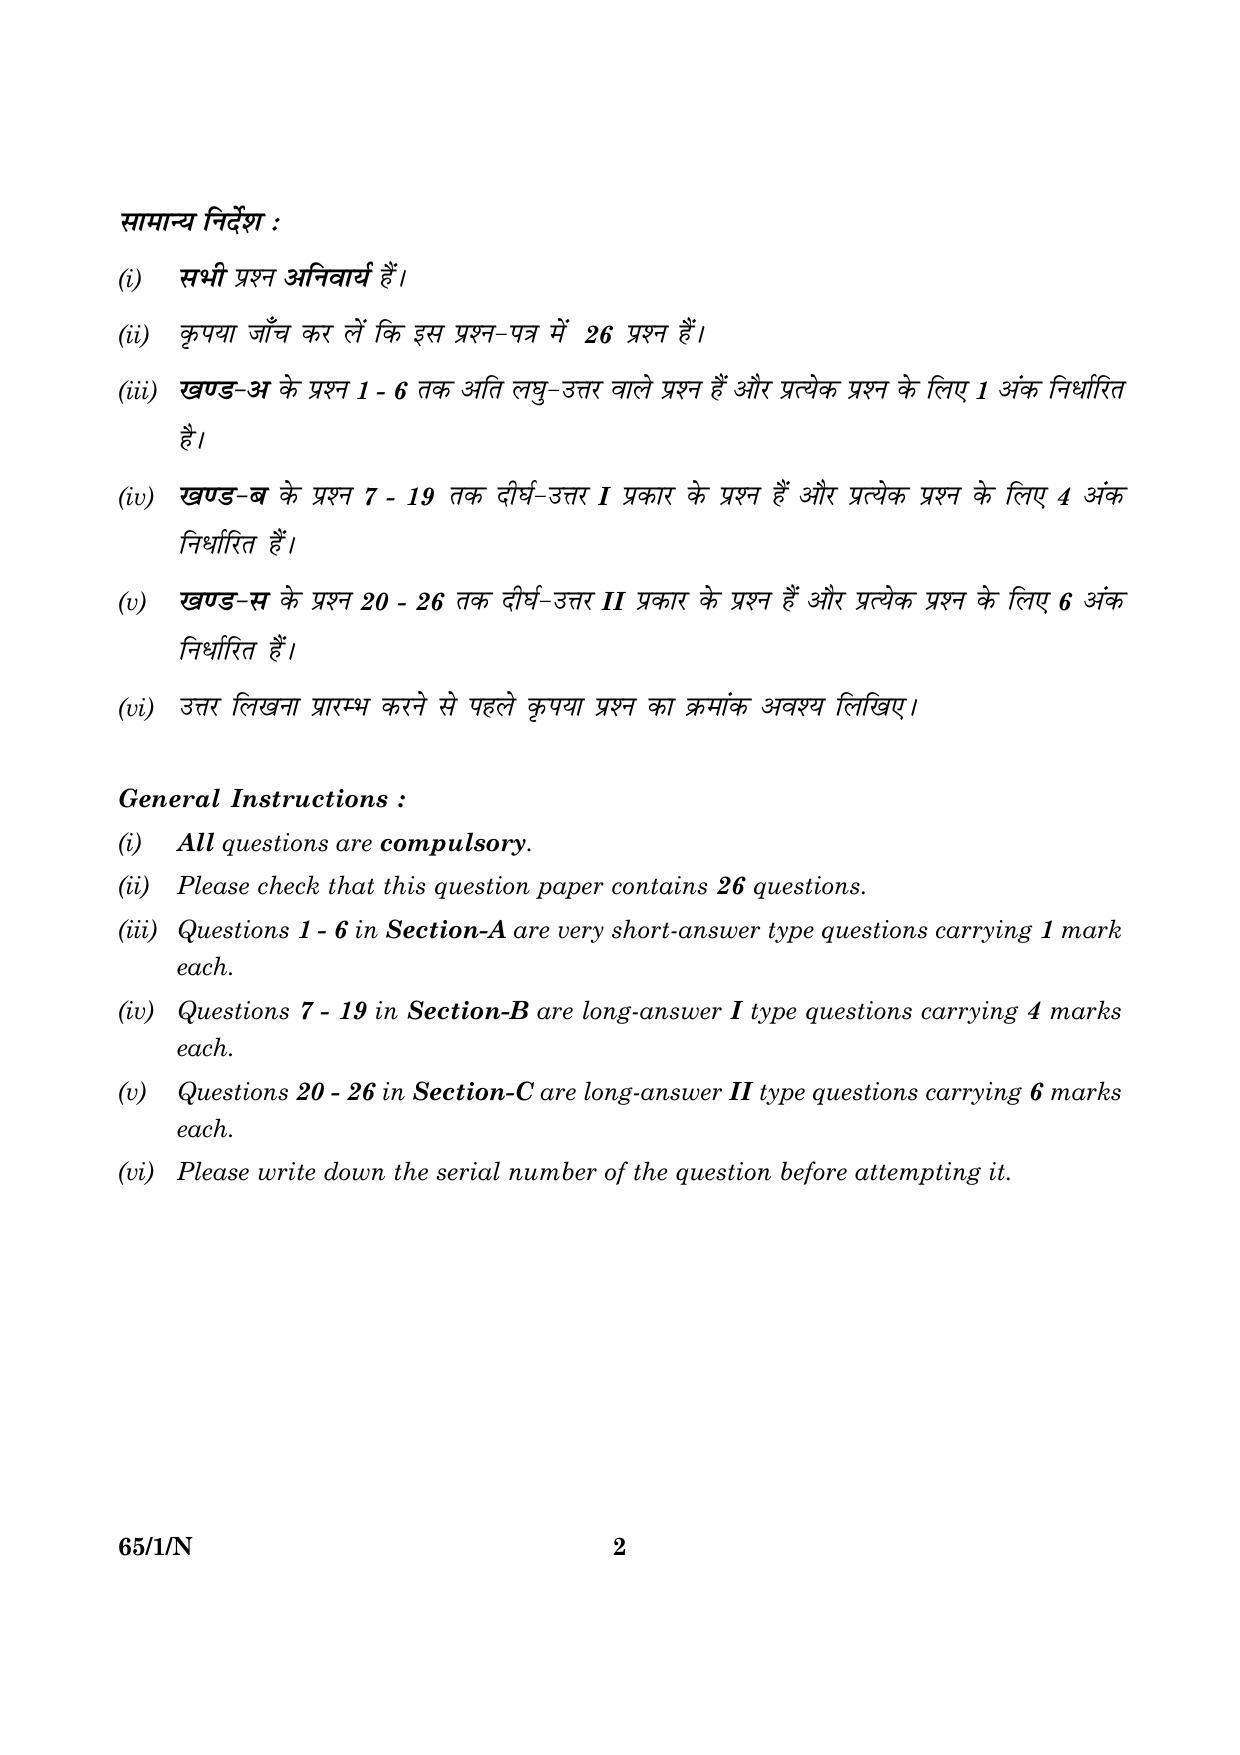 CBSE Class 12 065 Set 1 N Mathematics 2016 Question Paper - Page 2